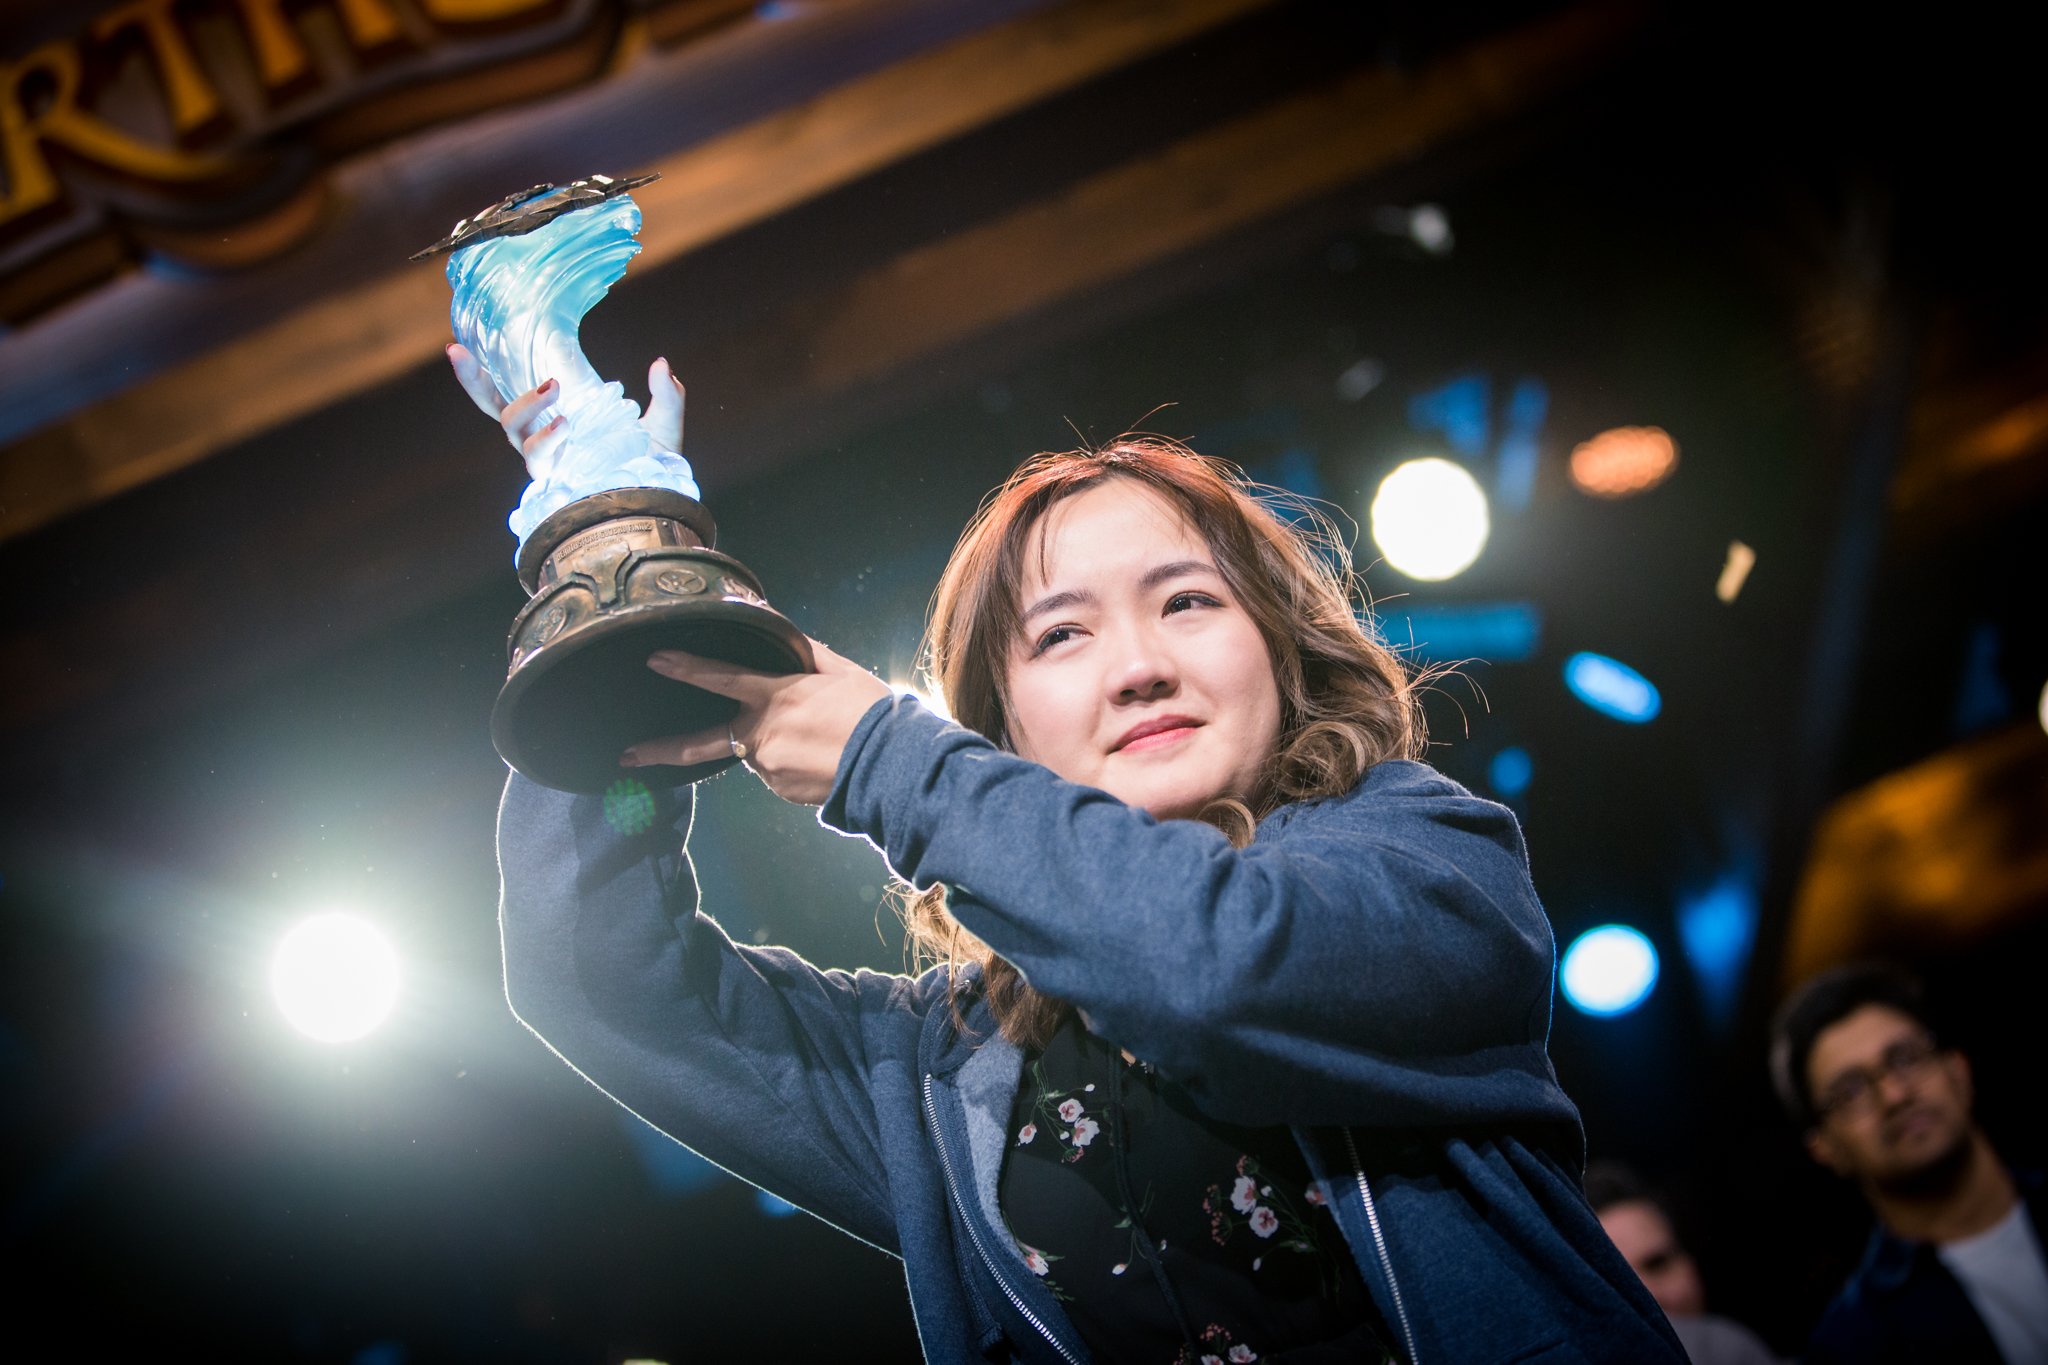 VKLiooon crowned first female Hearthstone Grandmasters Global Finals champion